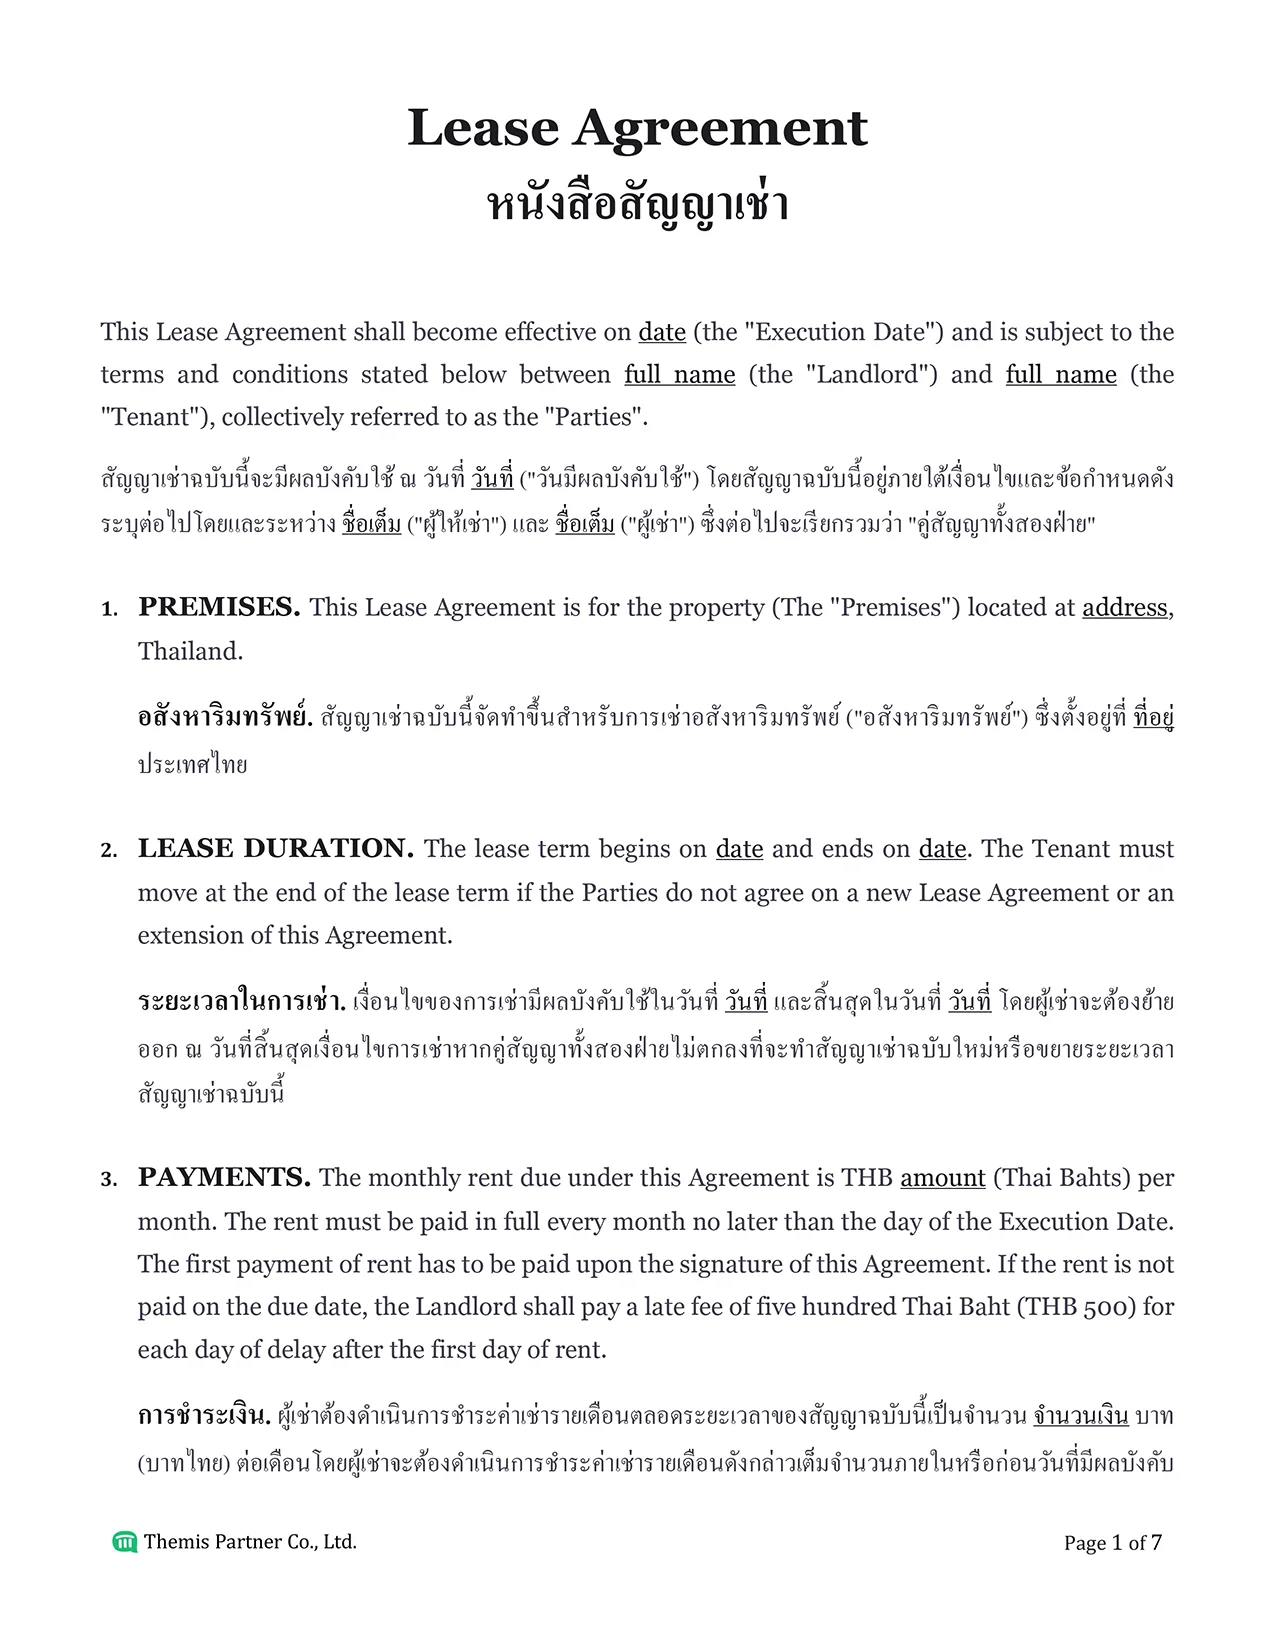 Lease agreement Thailand 1